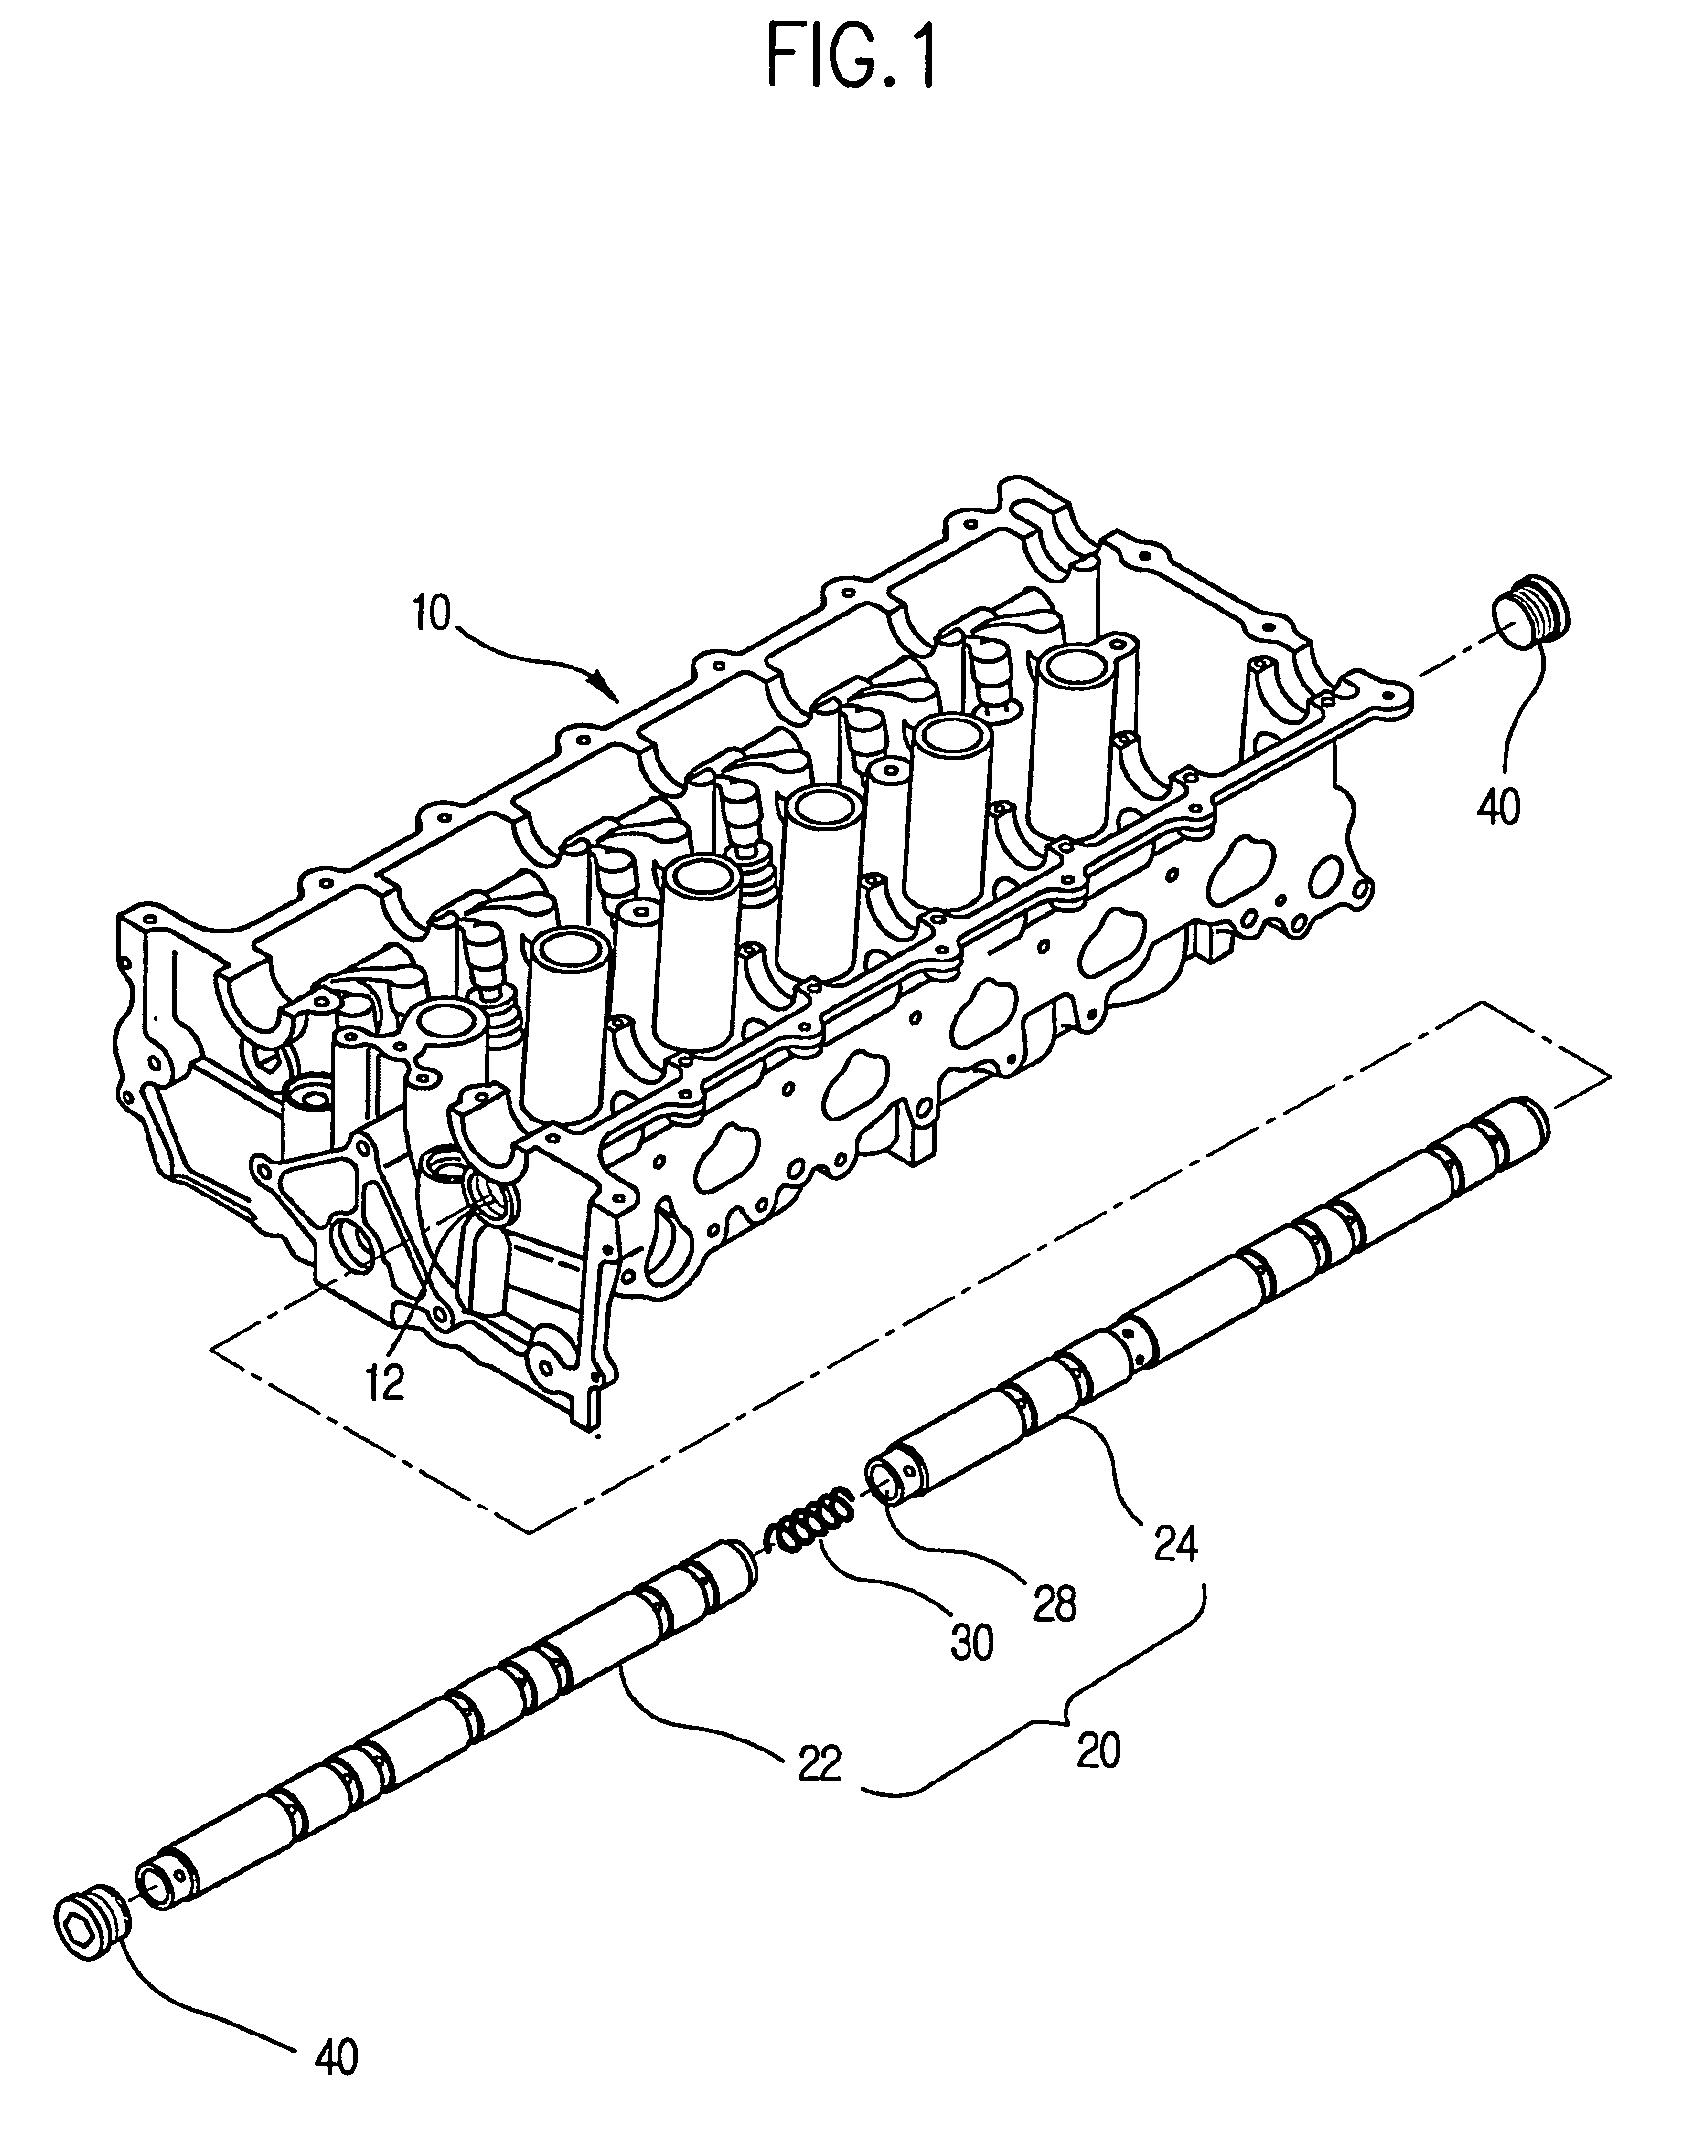 Rocker arm shaft for an automobile engine